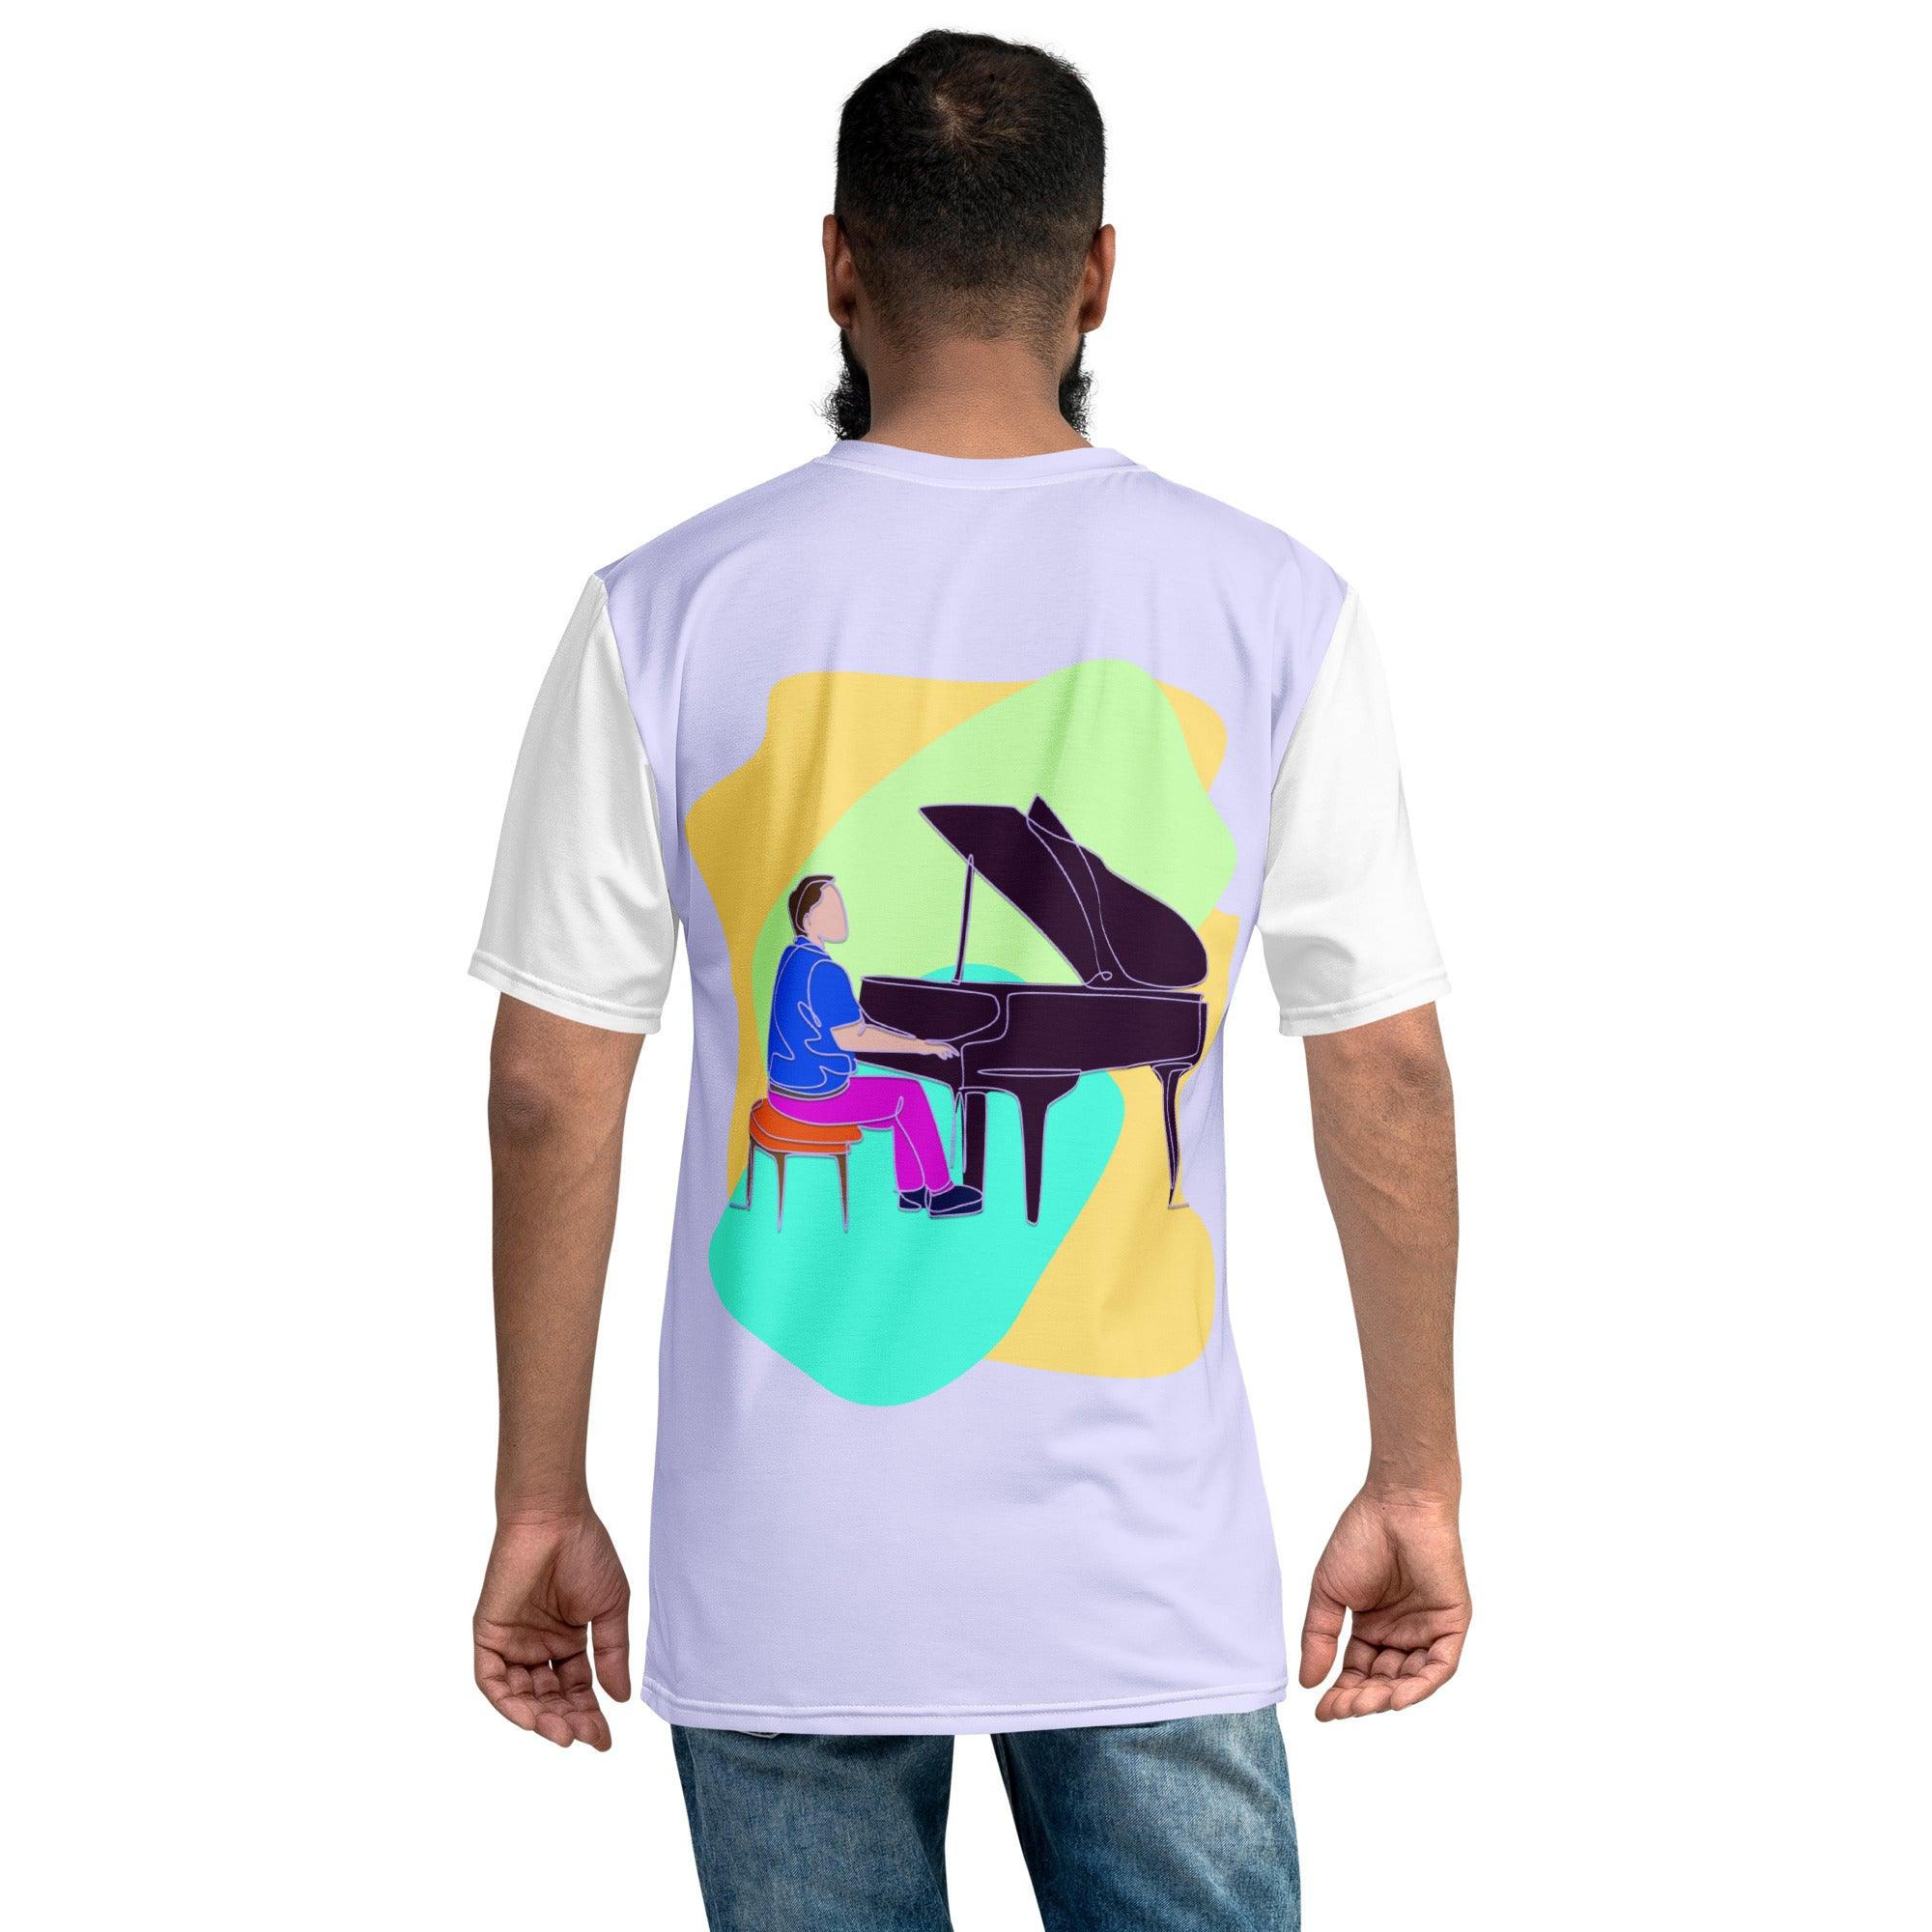 Piano player men's t-shirt - Beyond T-shirts